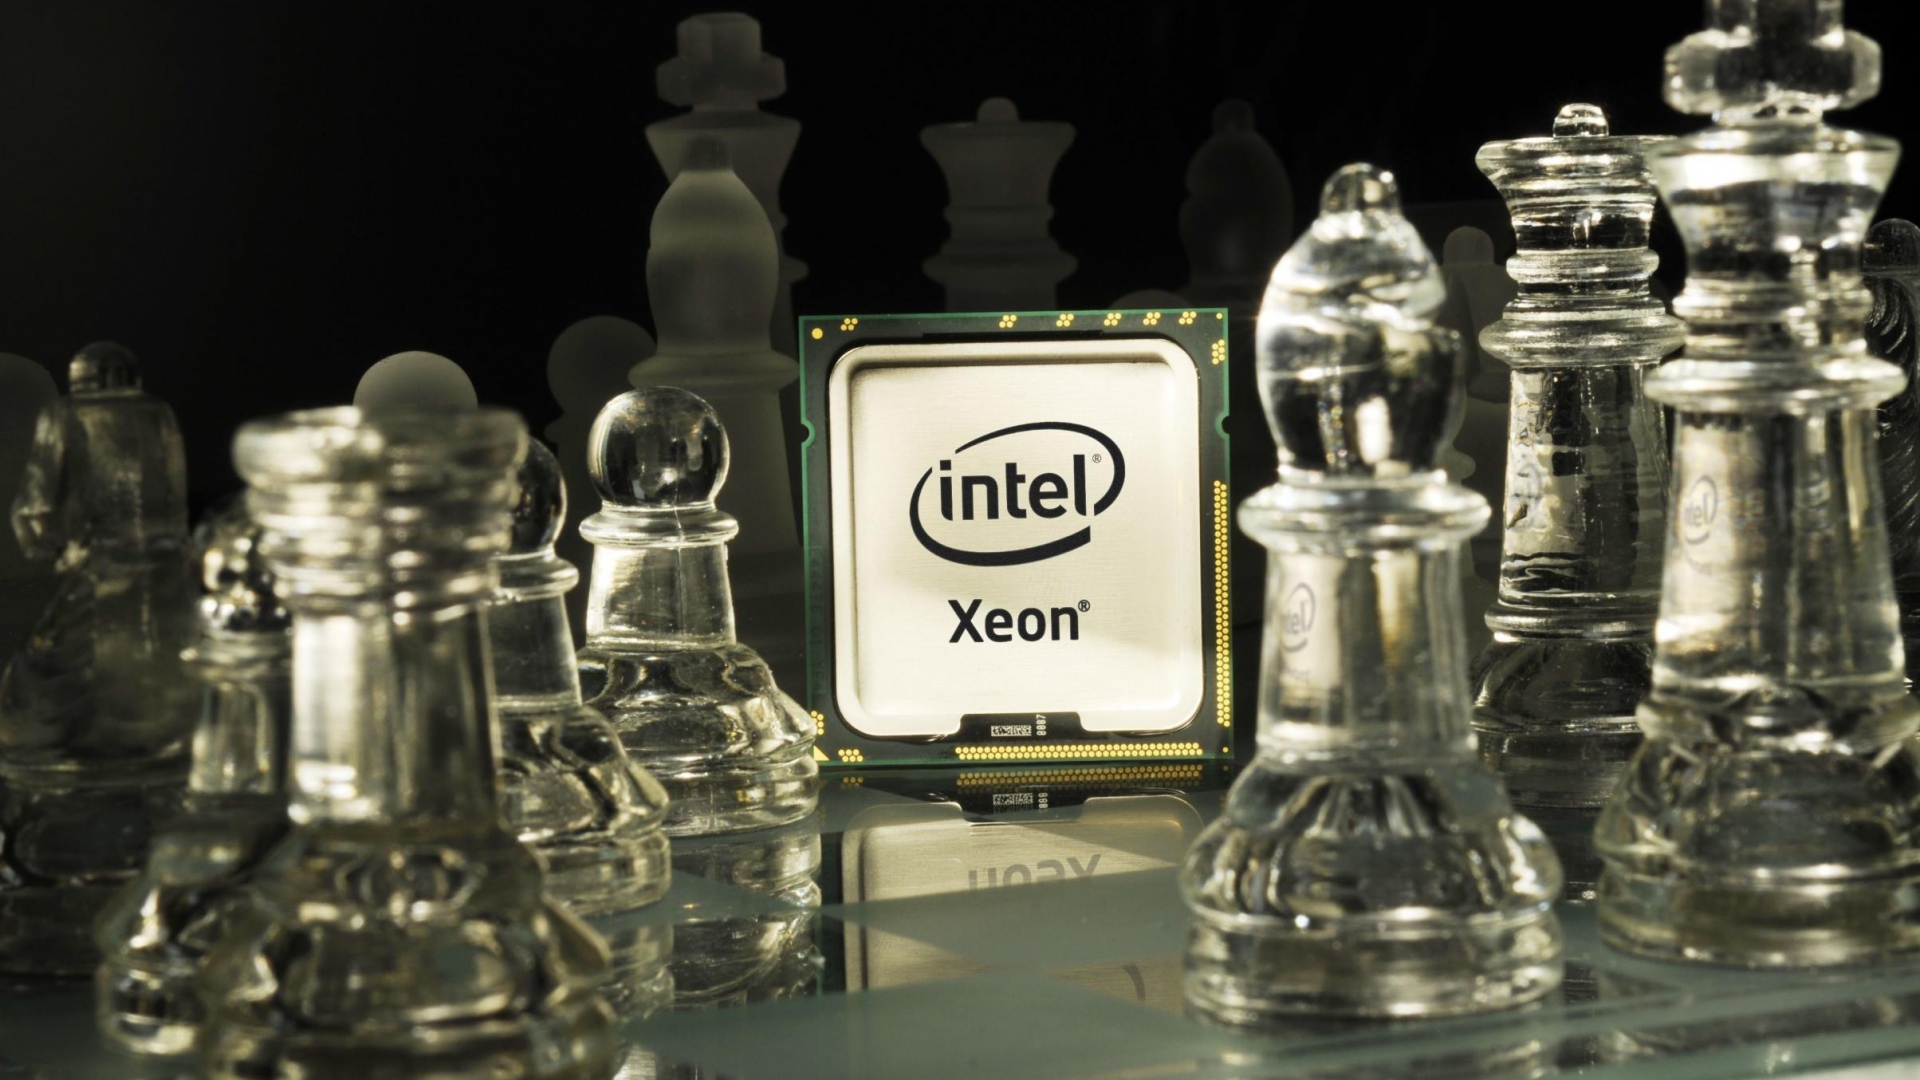 HD Wallpaper Intel Processor Glass Xeon